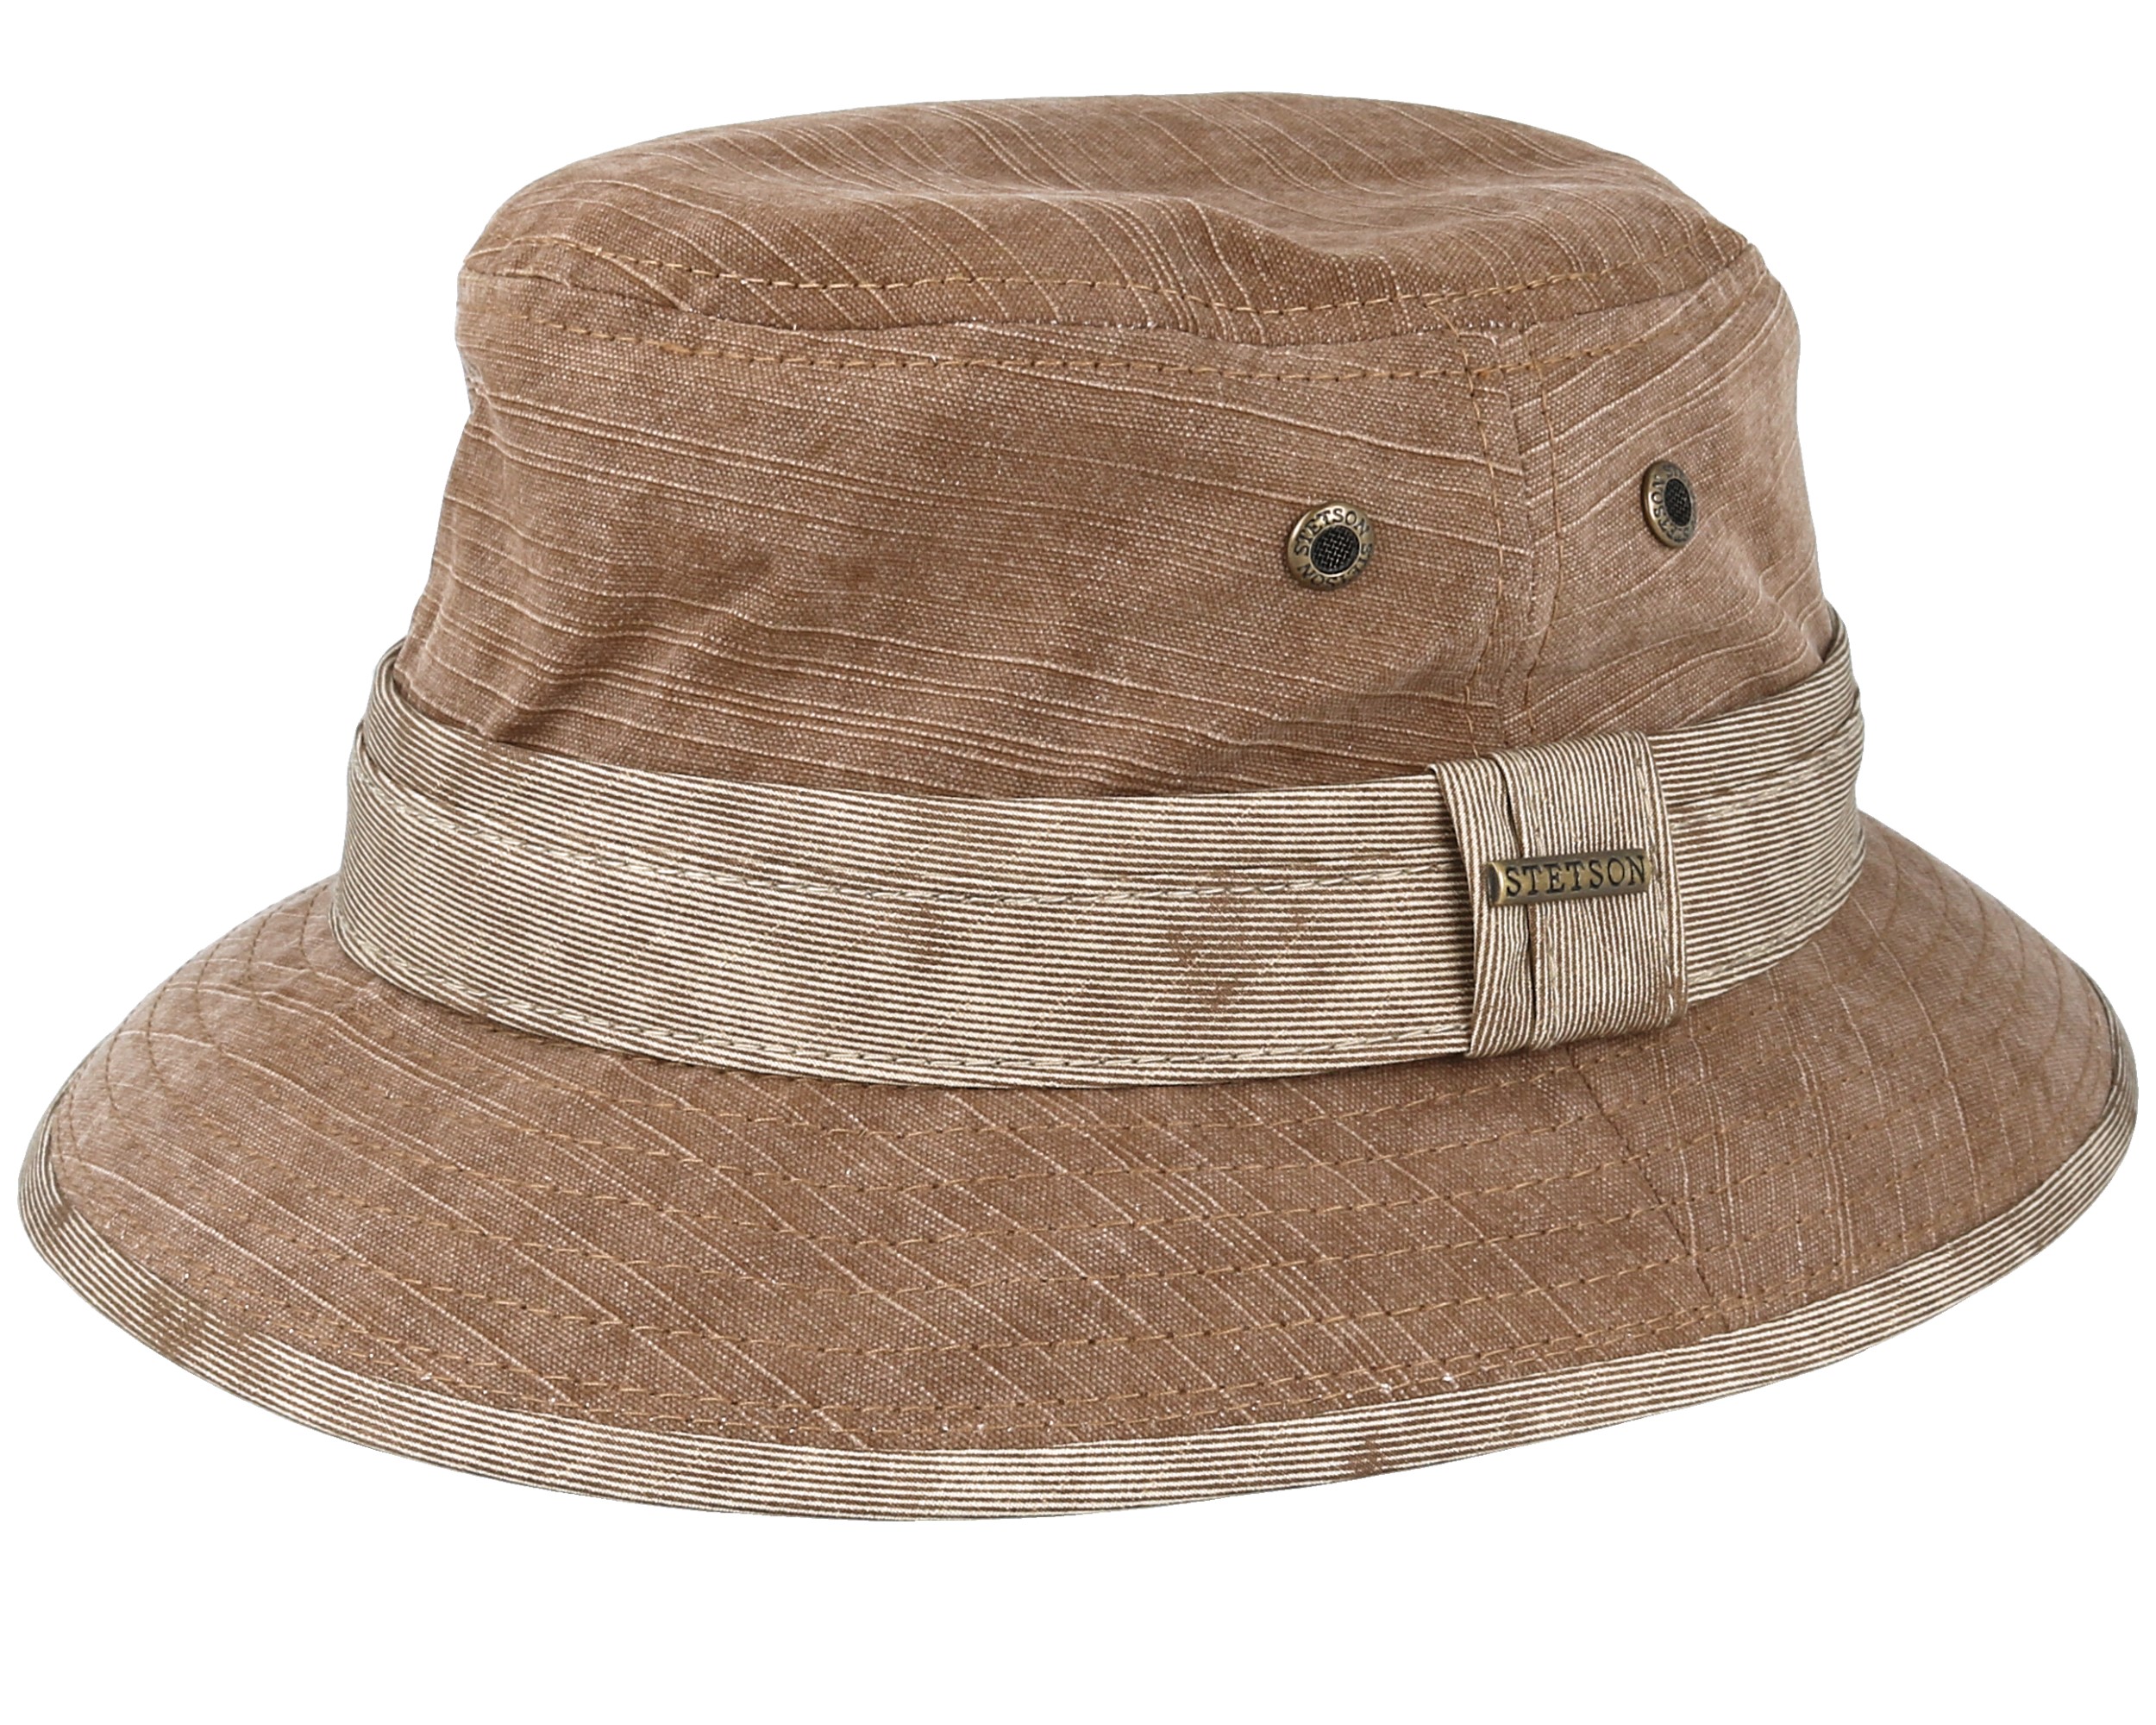 Cotton Brown Bucket - Stetson hats | Hatstore.co.uk